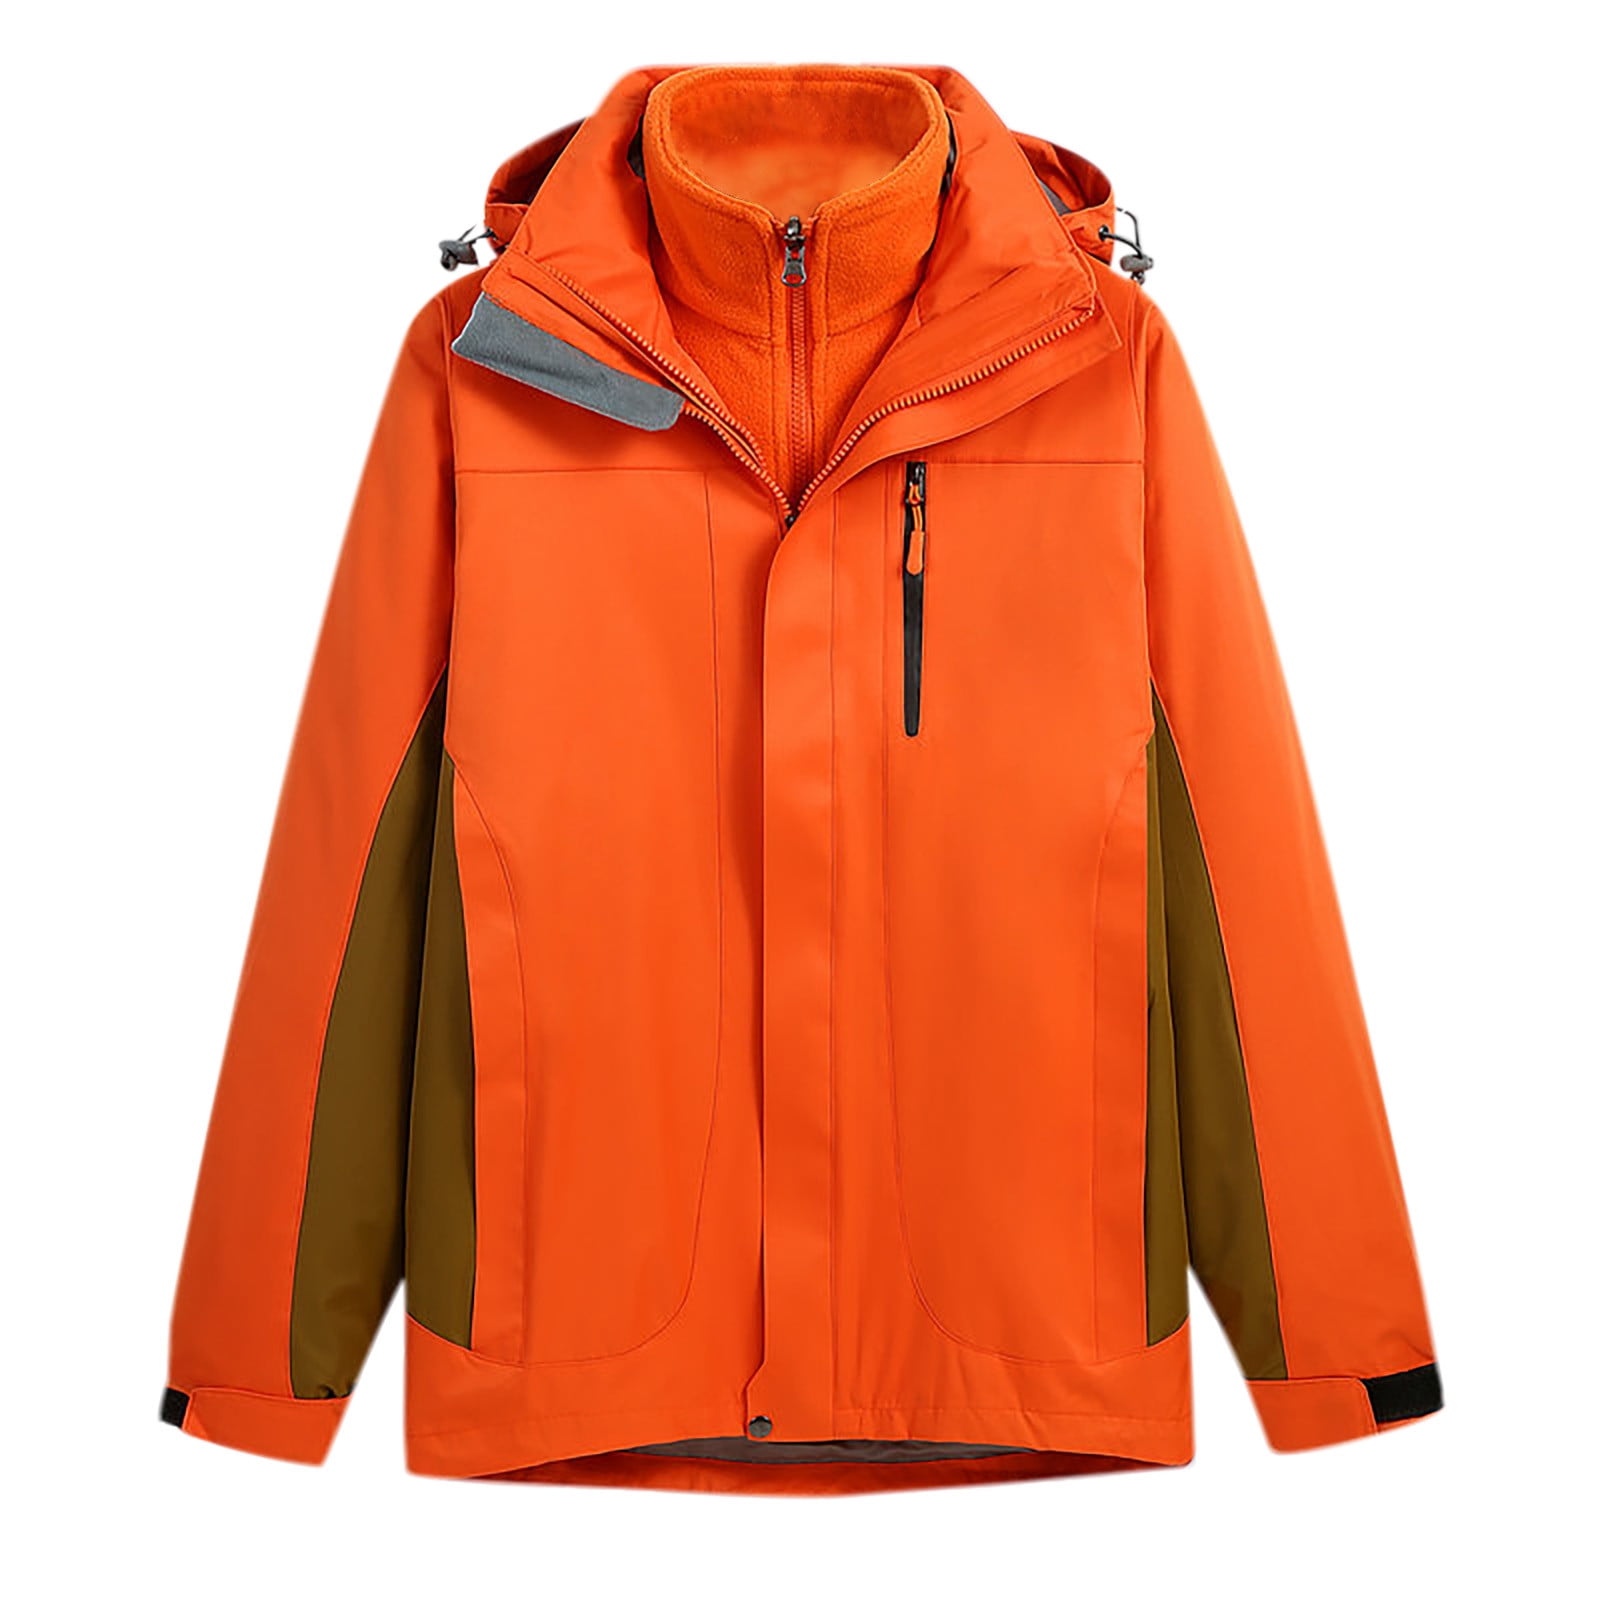 HAPIMO Clearance Men's Windbreaker Jacket Thin Zipper Hooded Windproof  Waterproof Cold Jacket Fall Winter Rushing Jacket with Pocket Orange